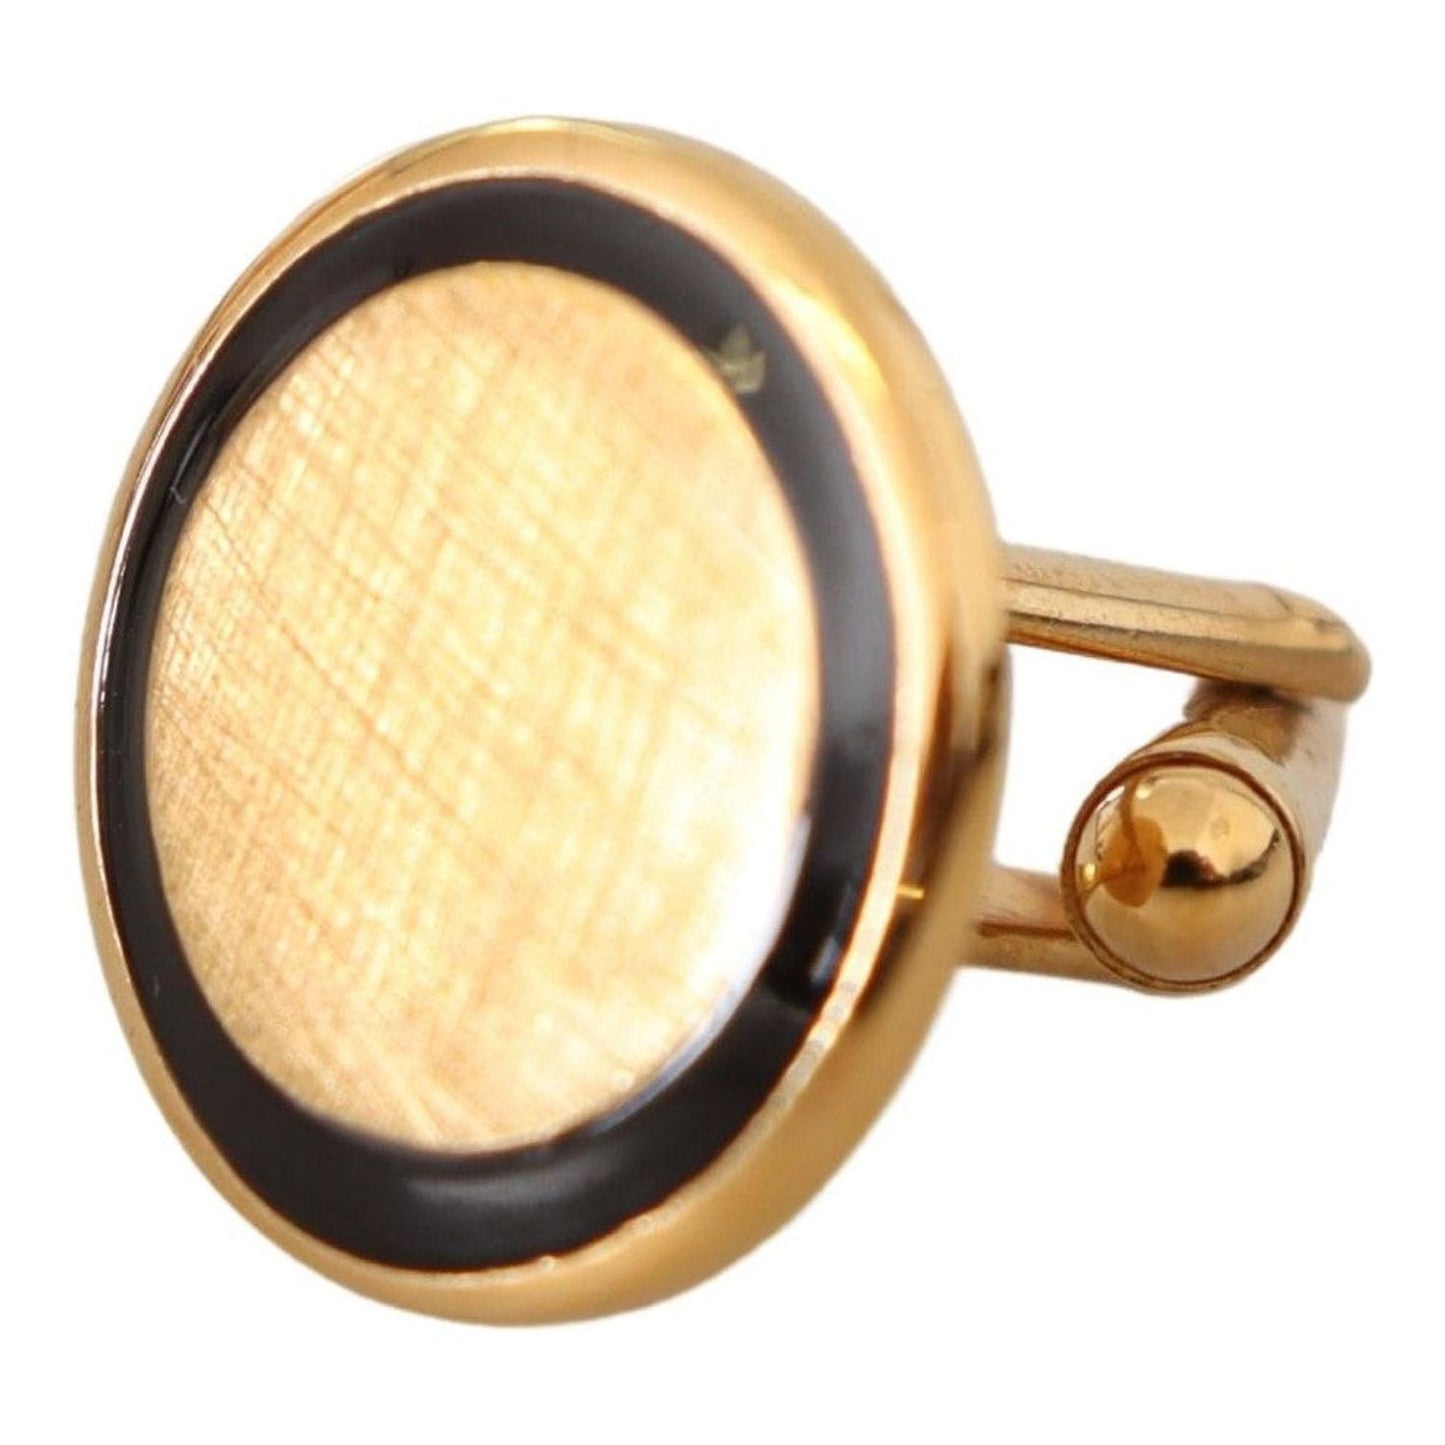 Dolce & Gabbana Elegant Gold-Plated Round Cufflinks gold-plated-brass-round-pin-men-cufflinks-1 Cufflinks IMG_1780-1b6793b0-e9c.jpg